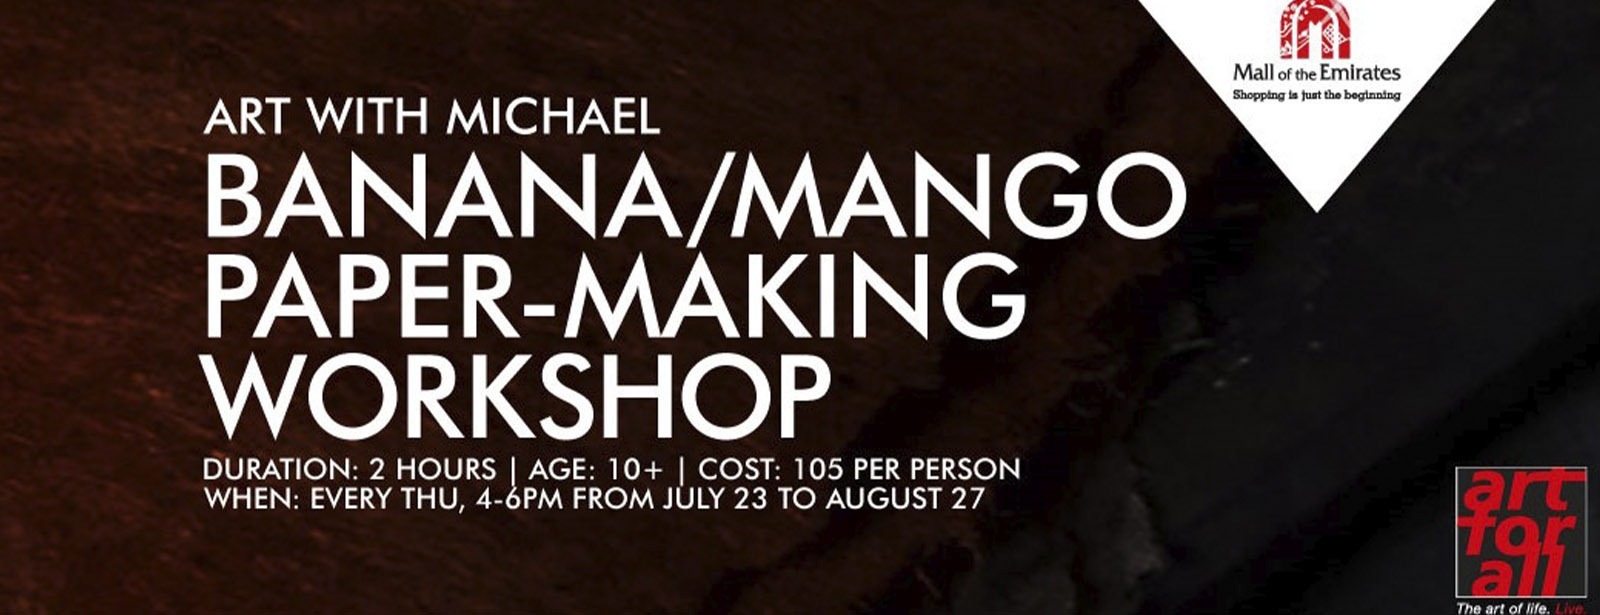 Workshop with Michael: Banana / Mango Paper-Making - Coming Soon in UAE